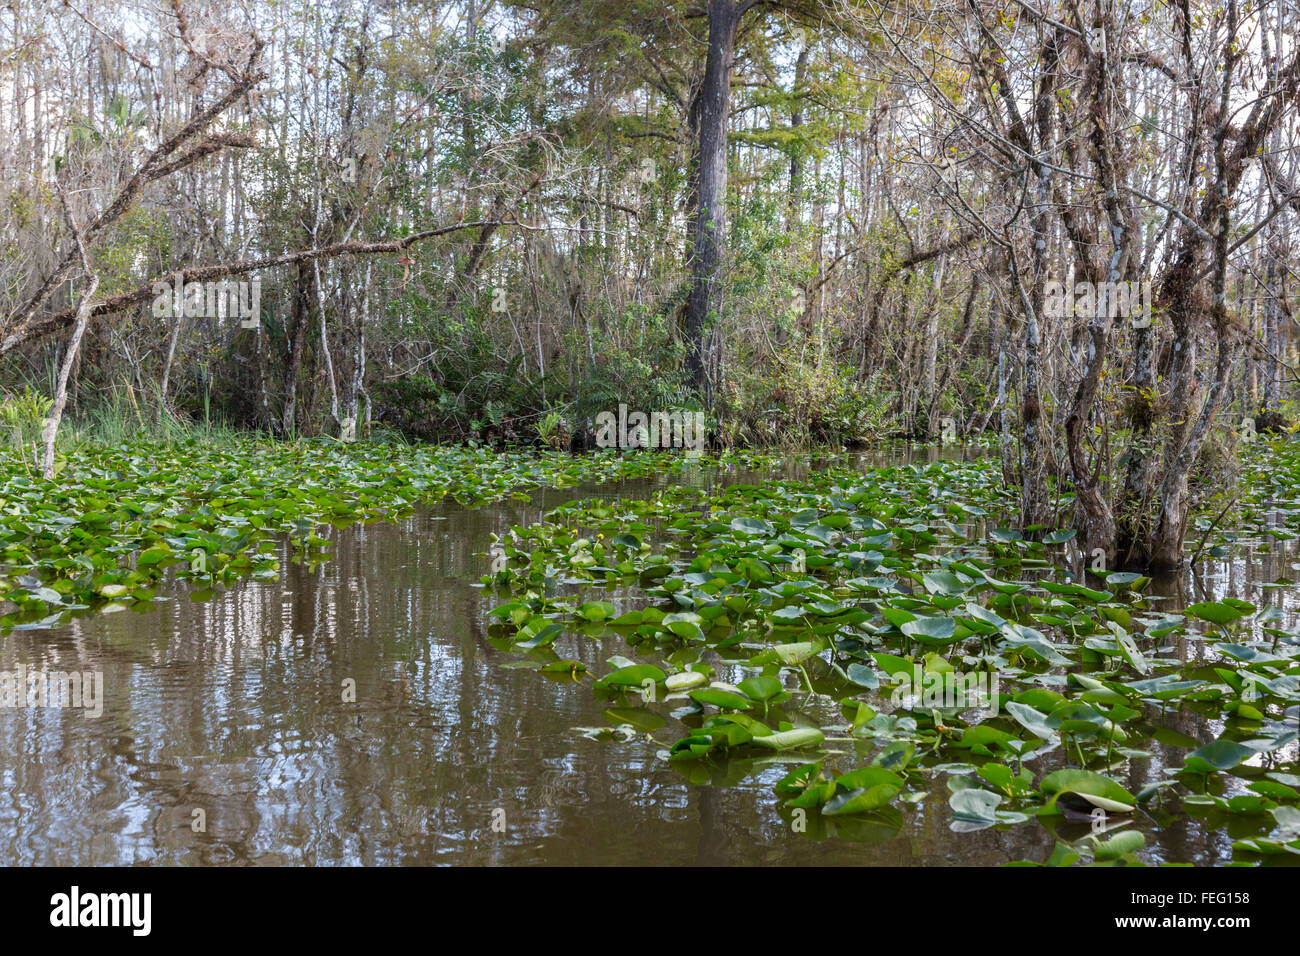 Wetlands vegetation, Southern Florida. Stock Photo